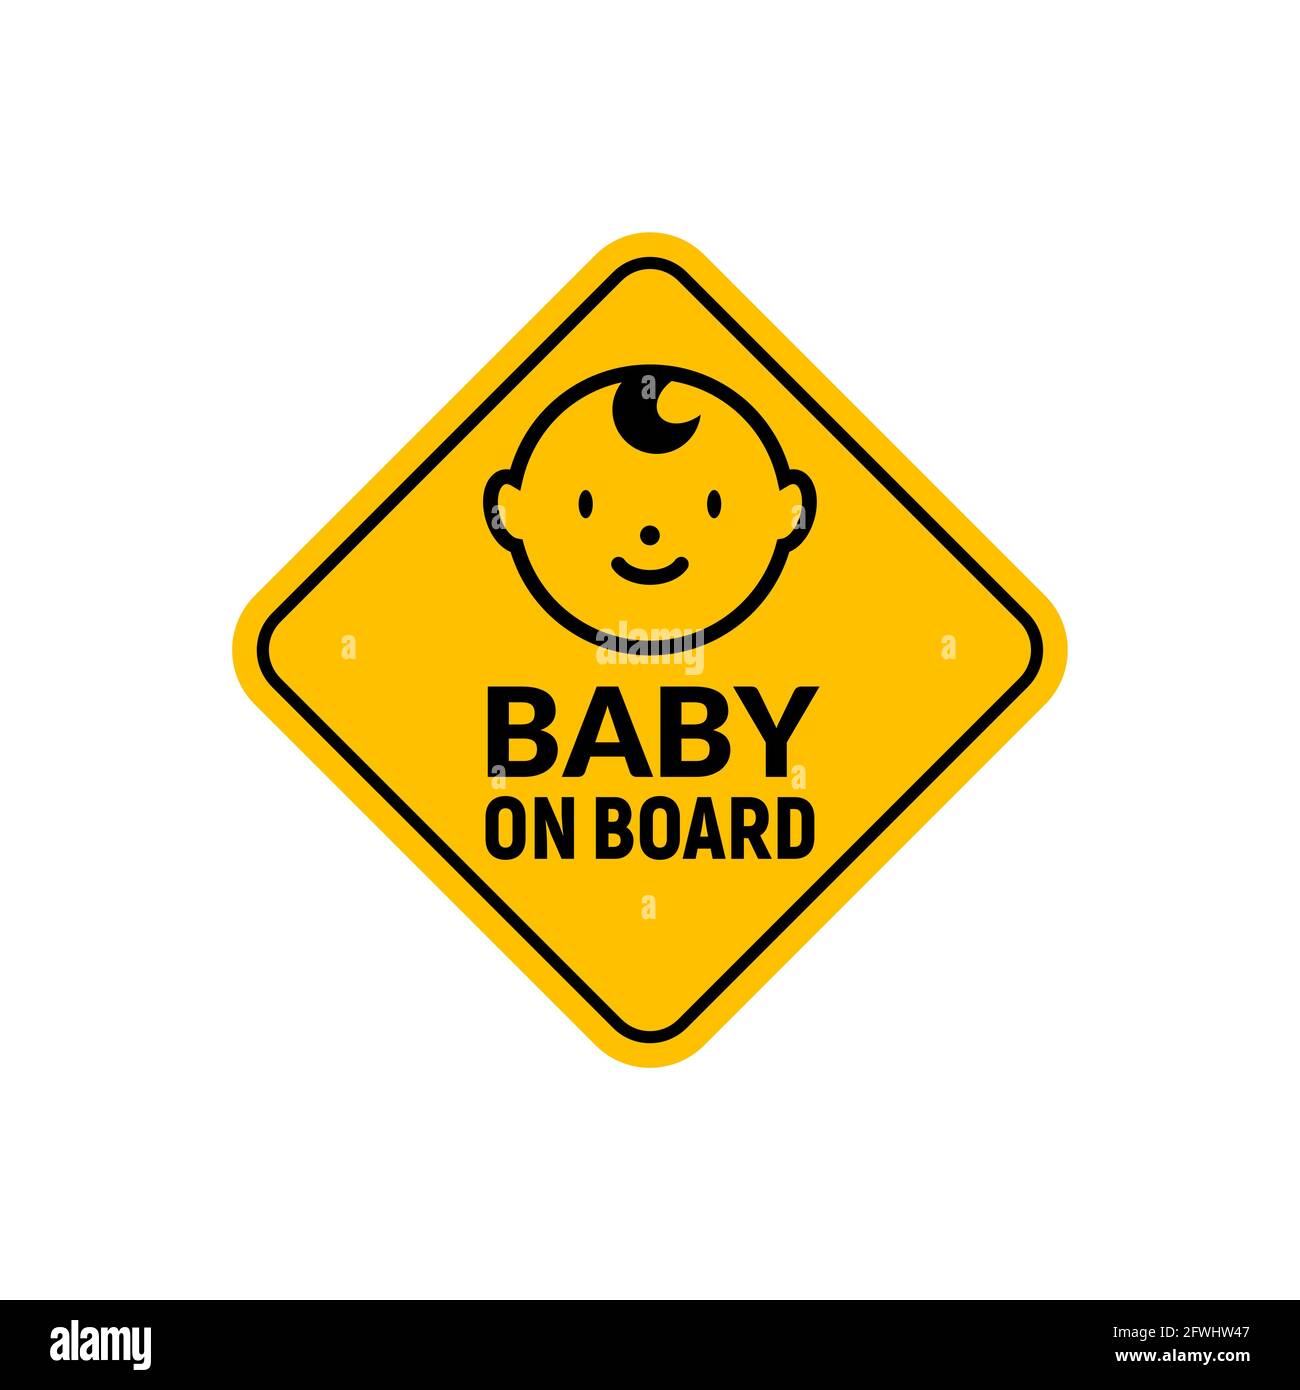 https://c8.alamy.com/comp/2FWHW47/baby-on-board-sign-icon-child-safety-sticker-warning-emblem-baby-safety-design-illustration-2FWHW47.jpg